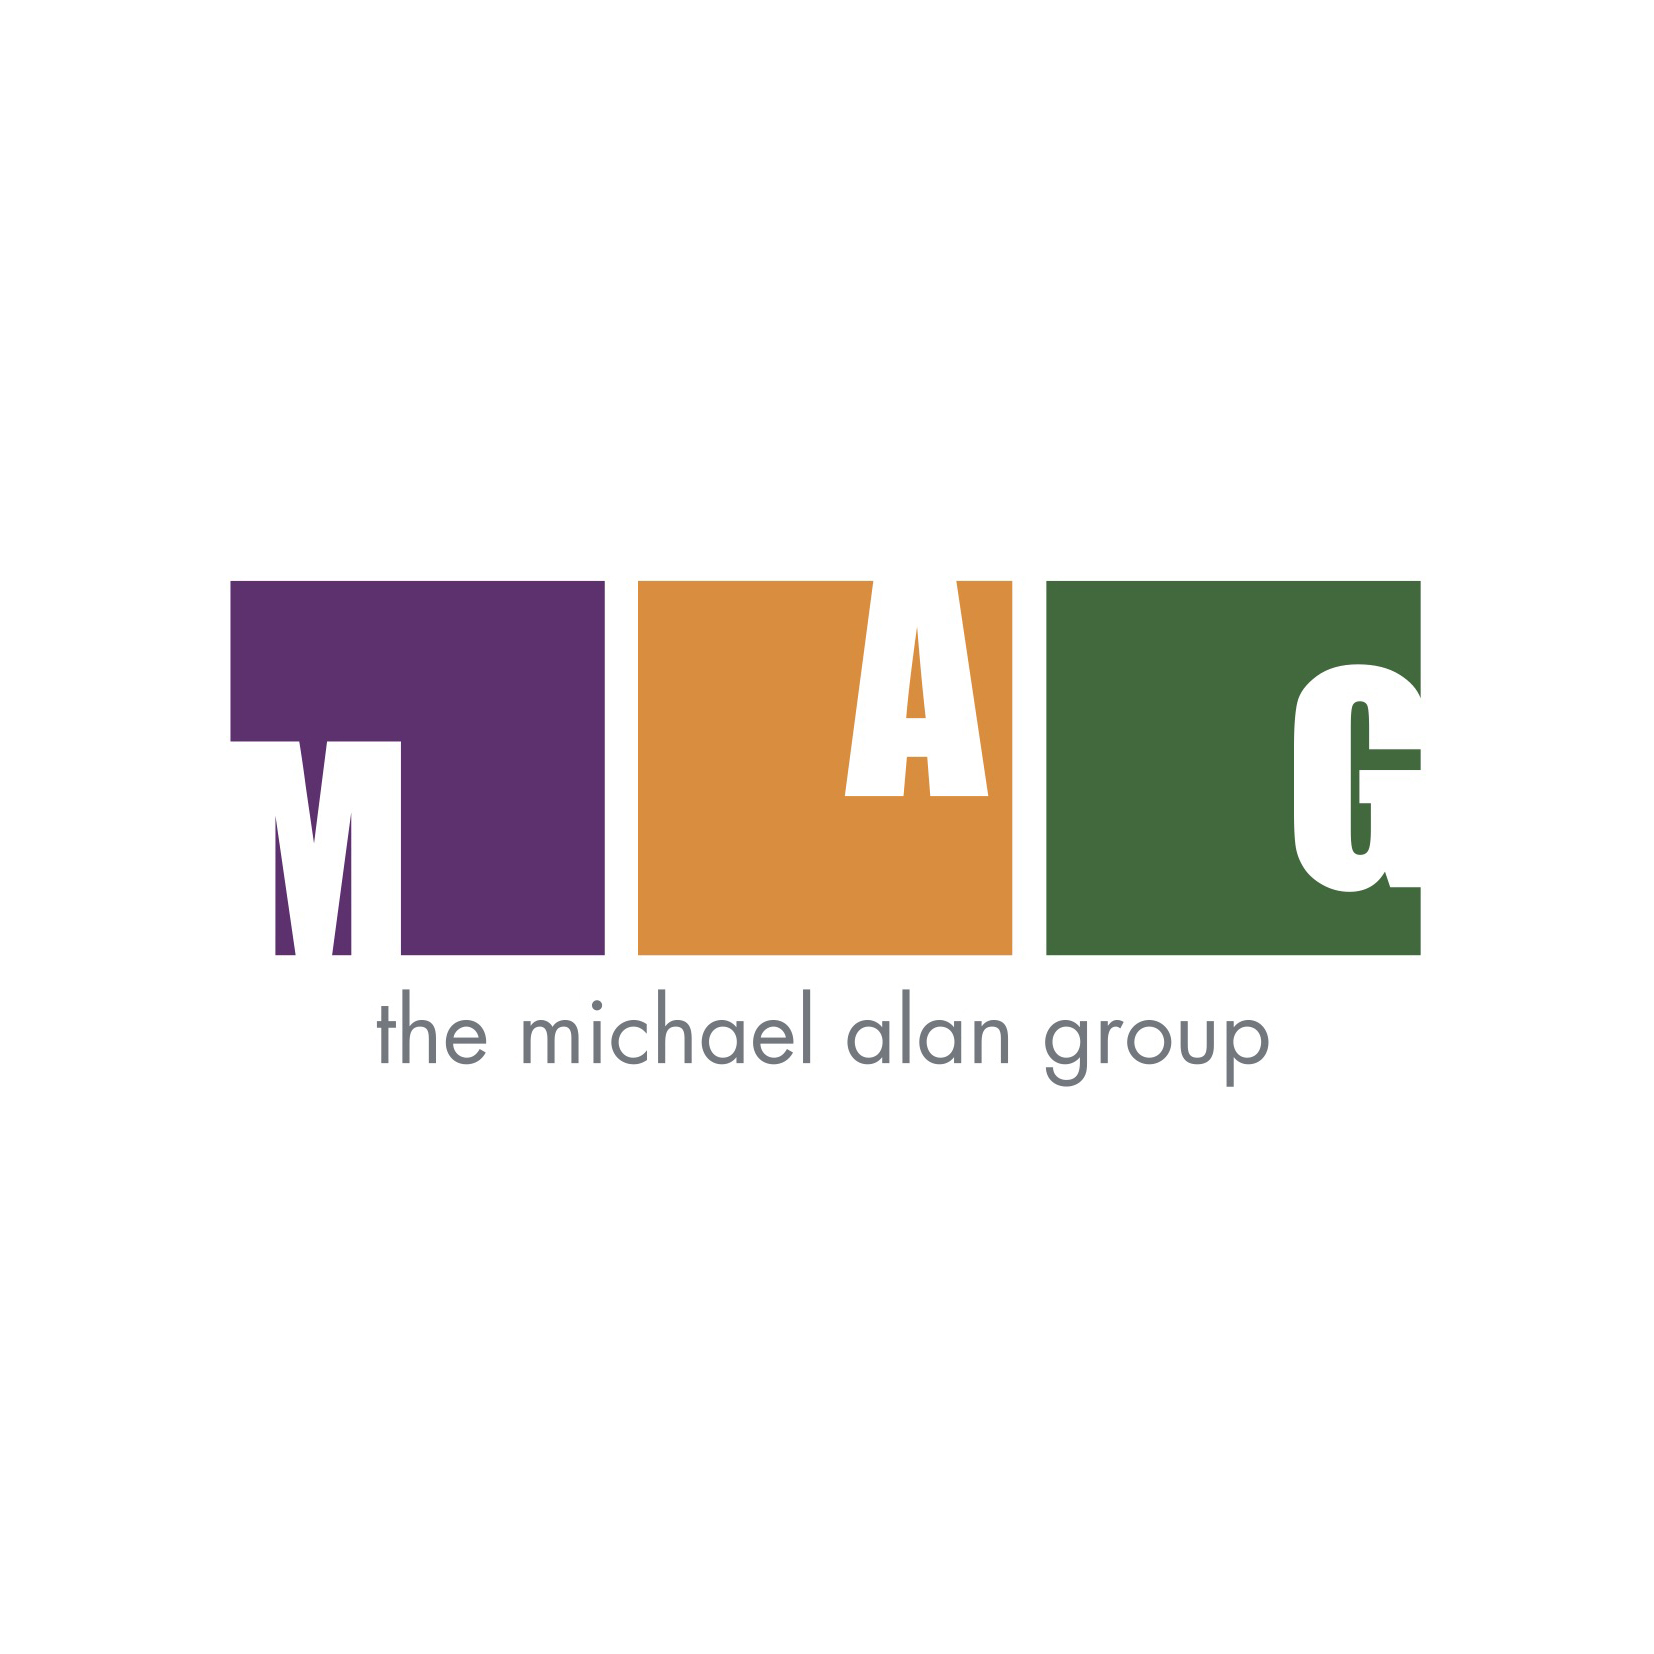 The Michael Alan Group